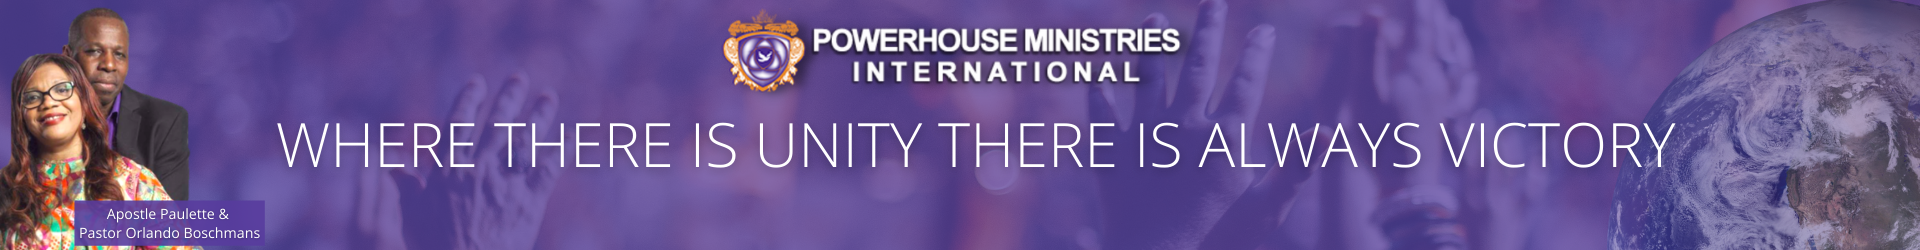 Powerhouse Ministries International